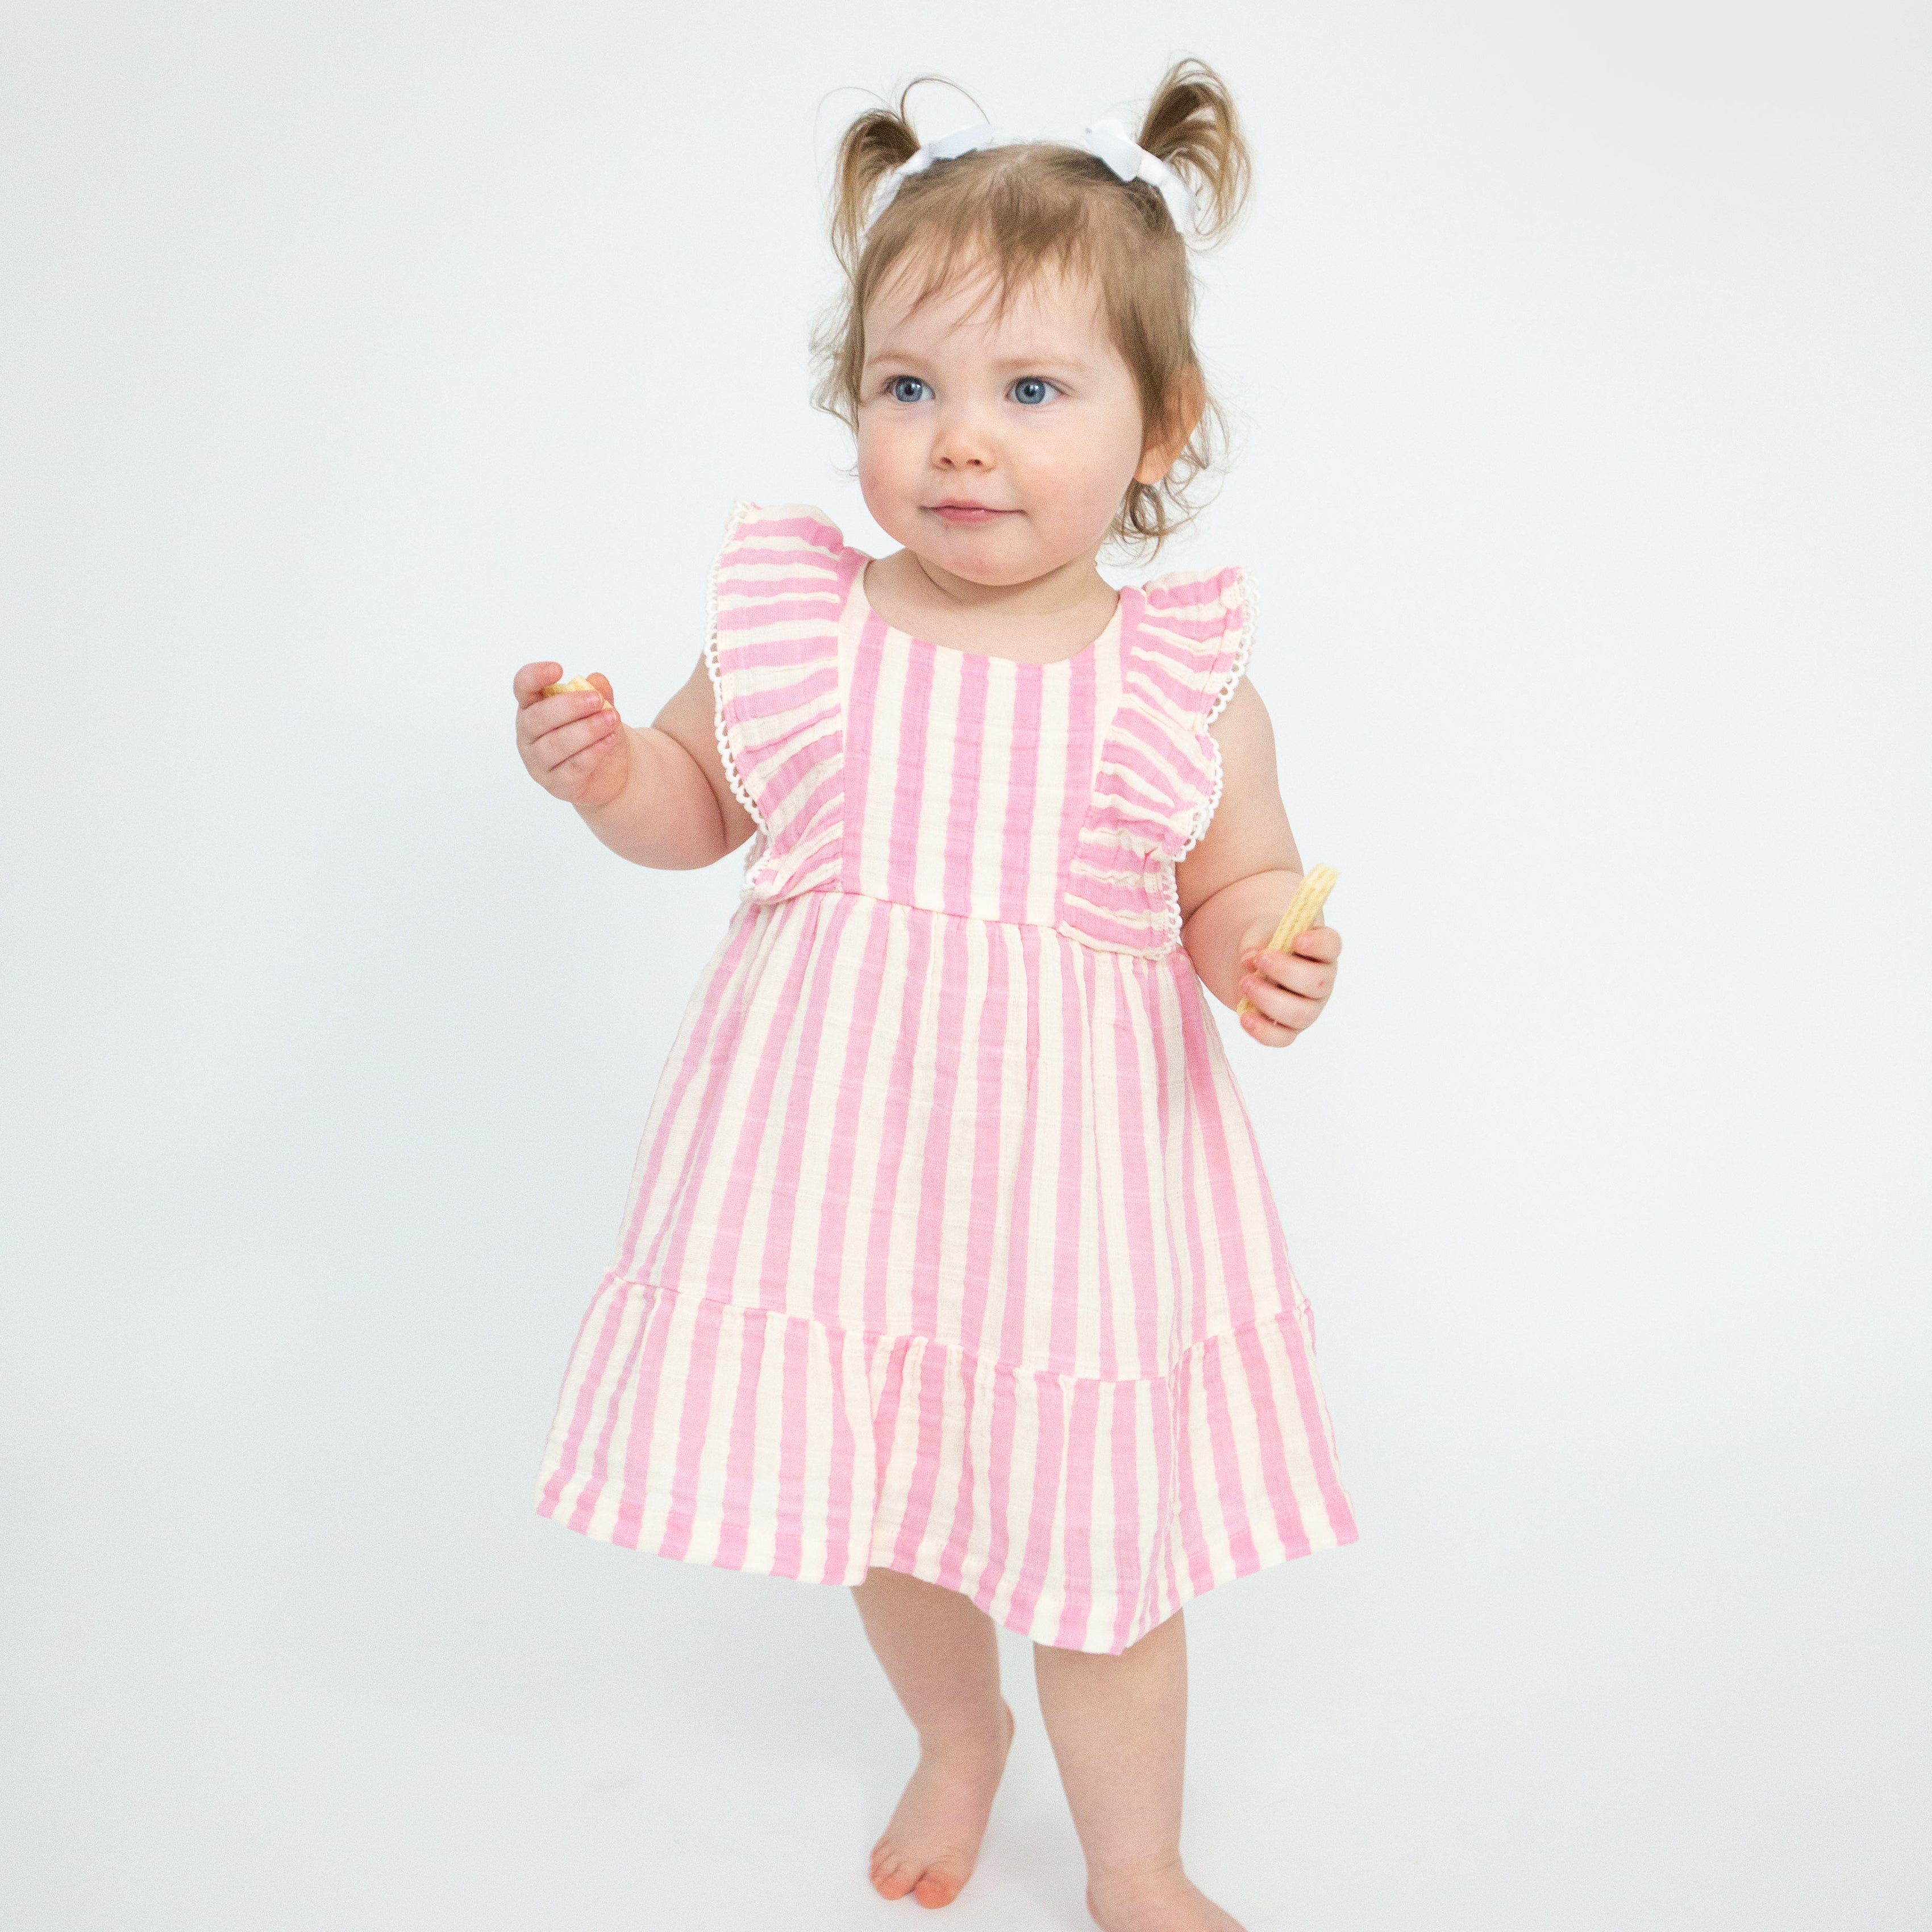 Picot Edged Dress + Diaper Cover - Pink Stripe